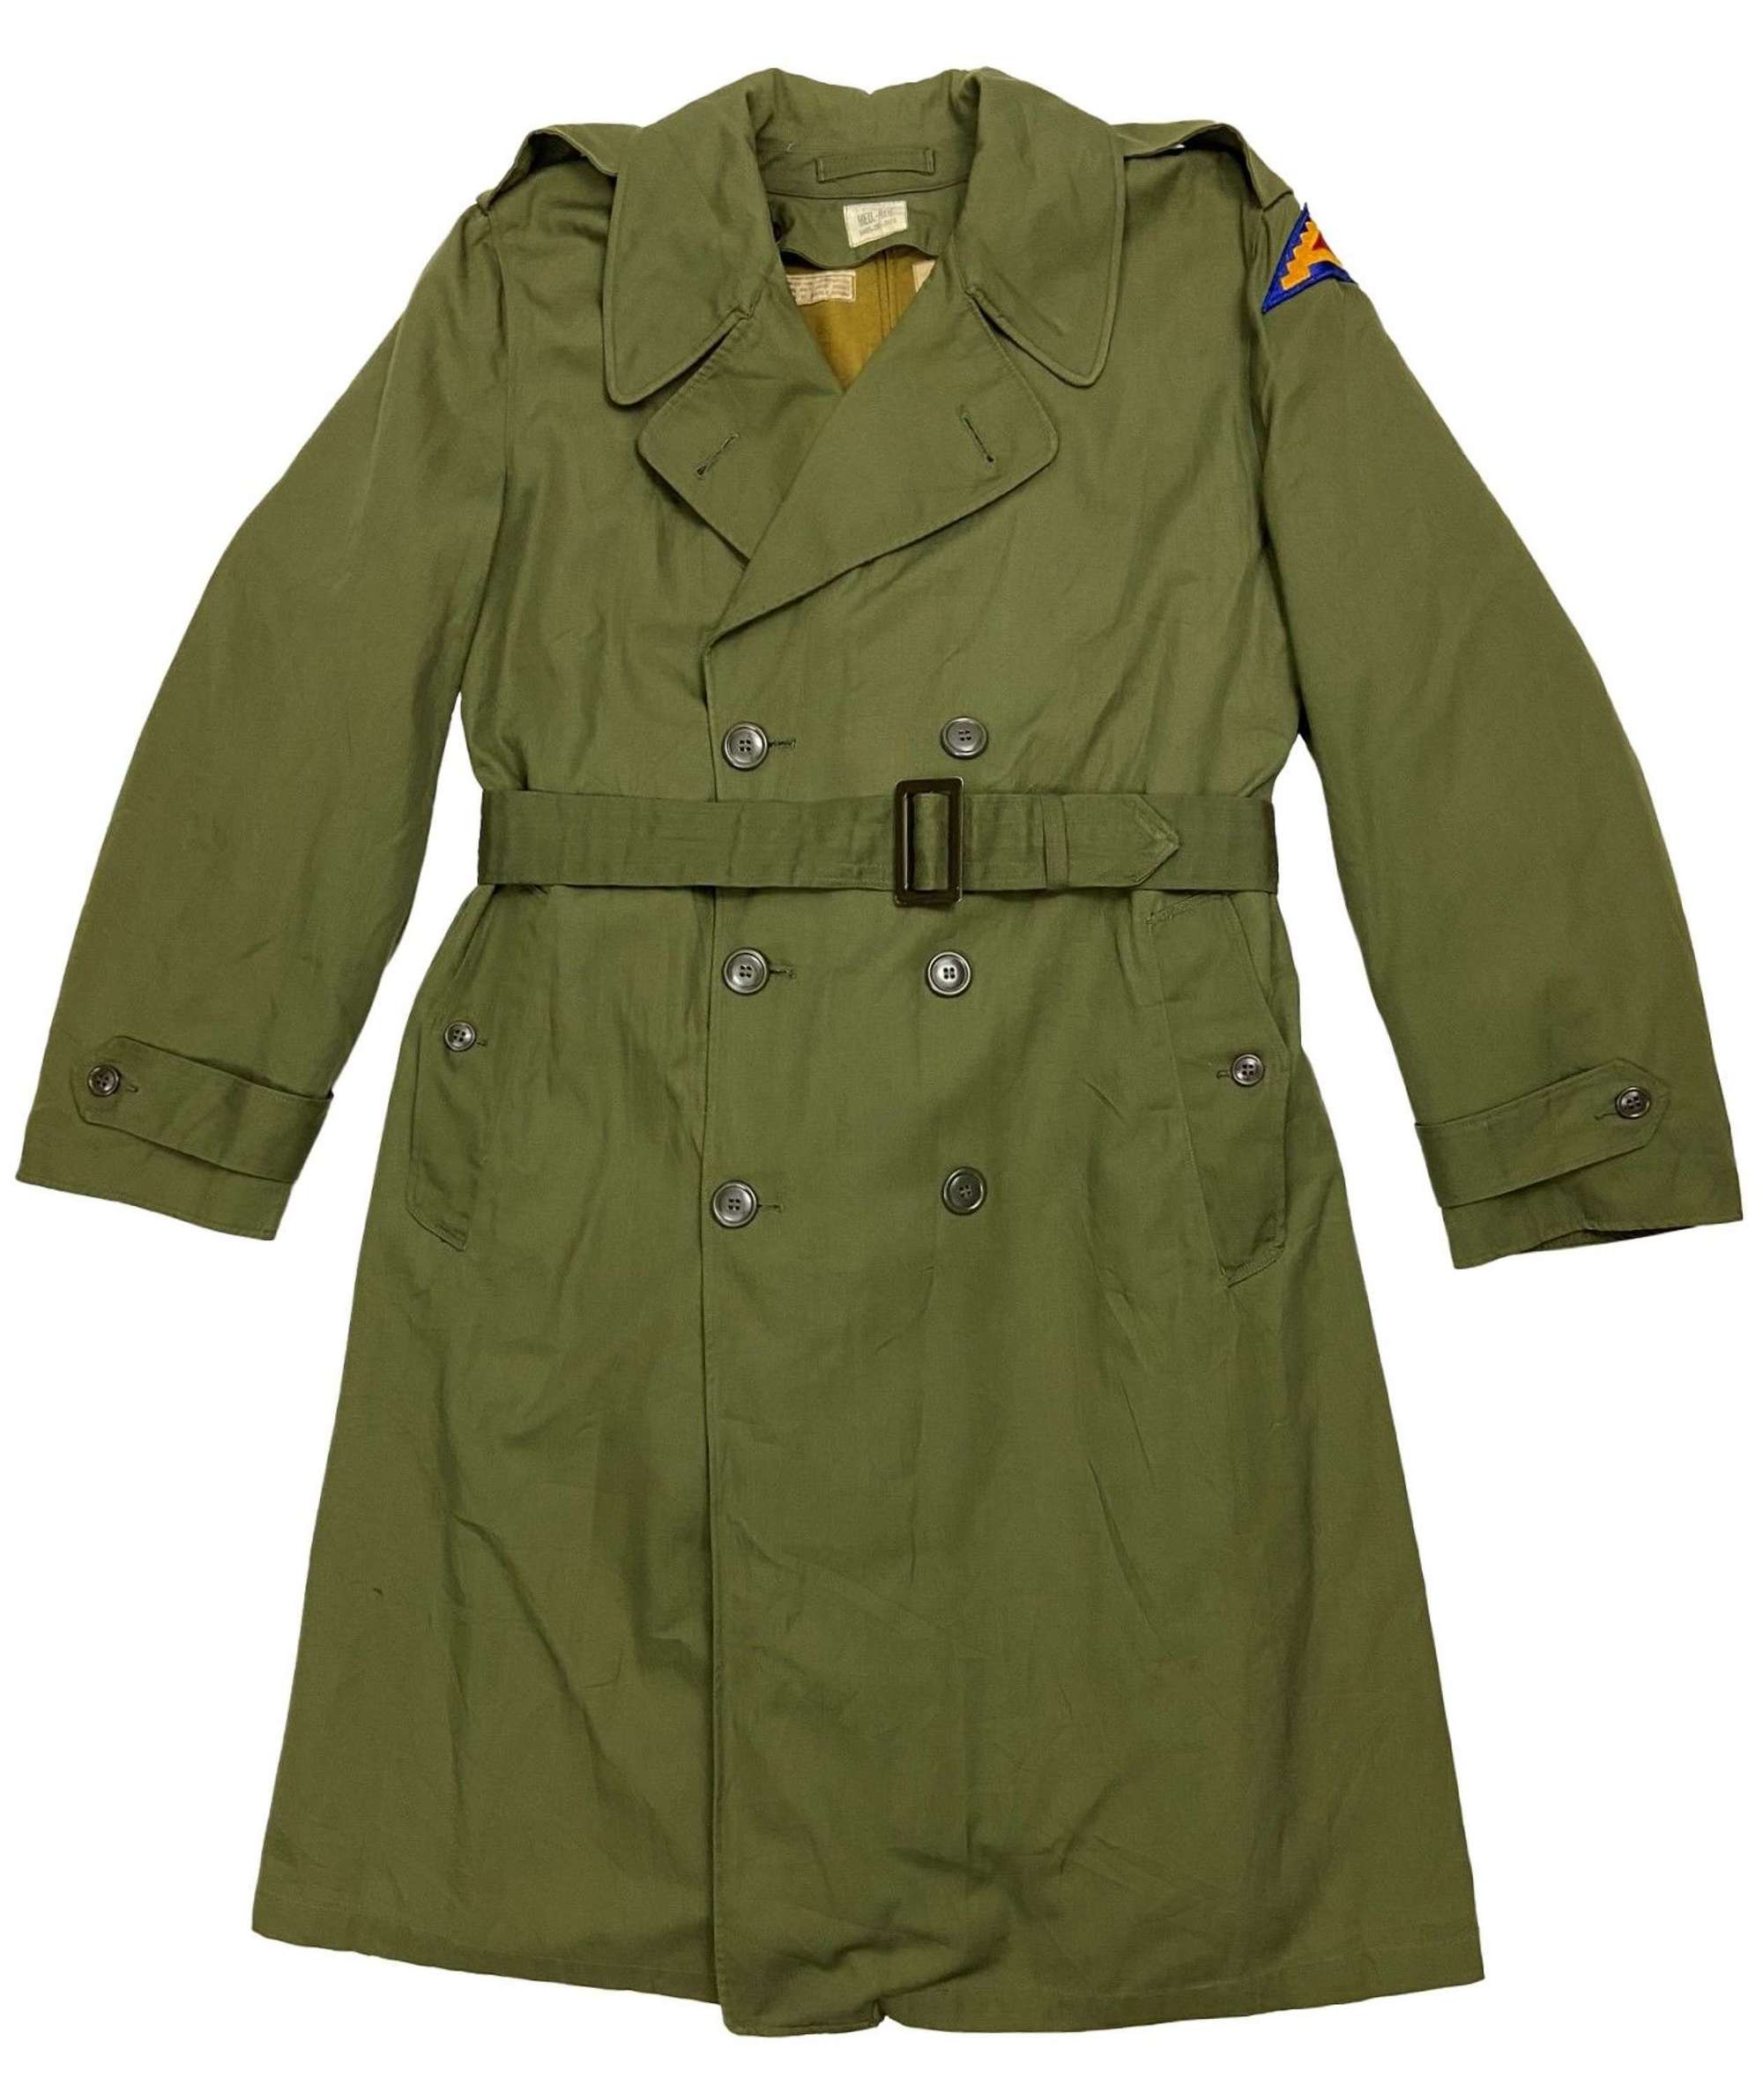 Original 1960s US Army O.G. 107 Raincoat - Size Regular Medium